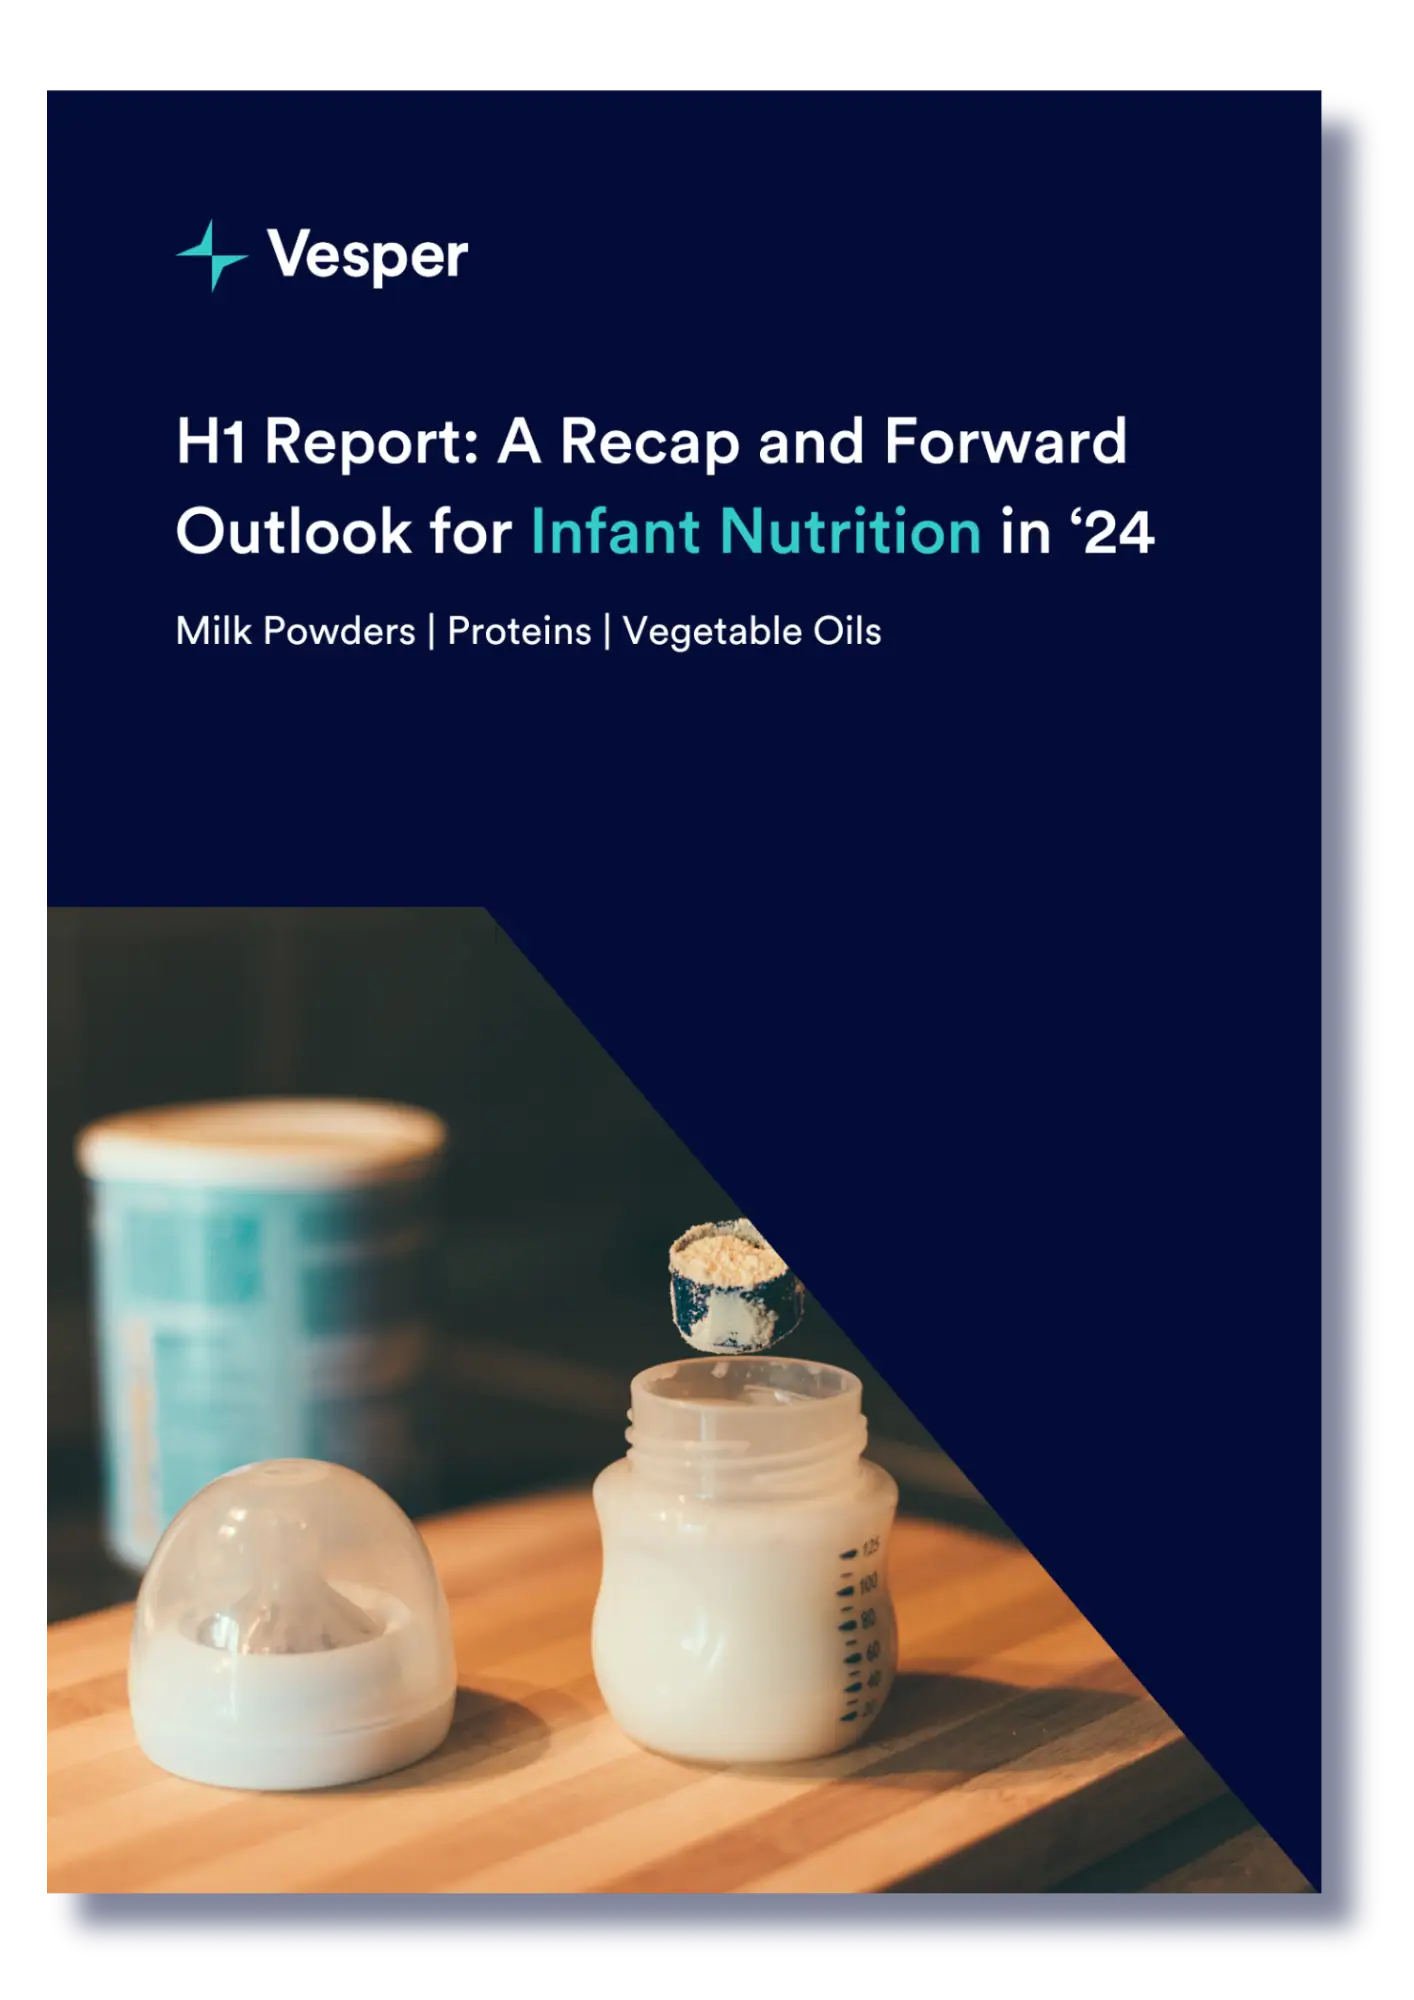 Vesper H1 Report: Infant Nutrition cover